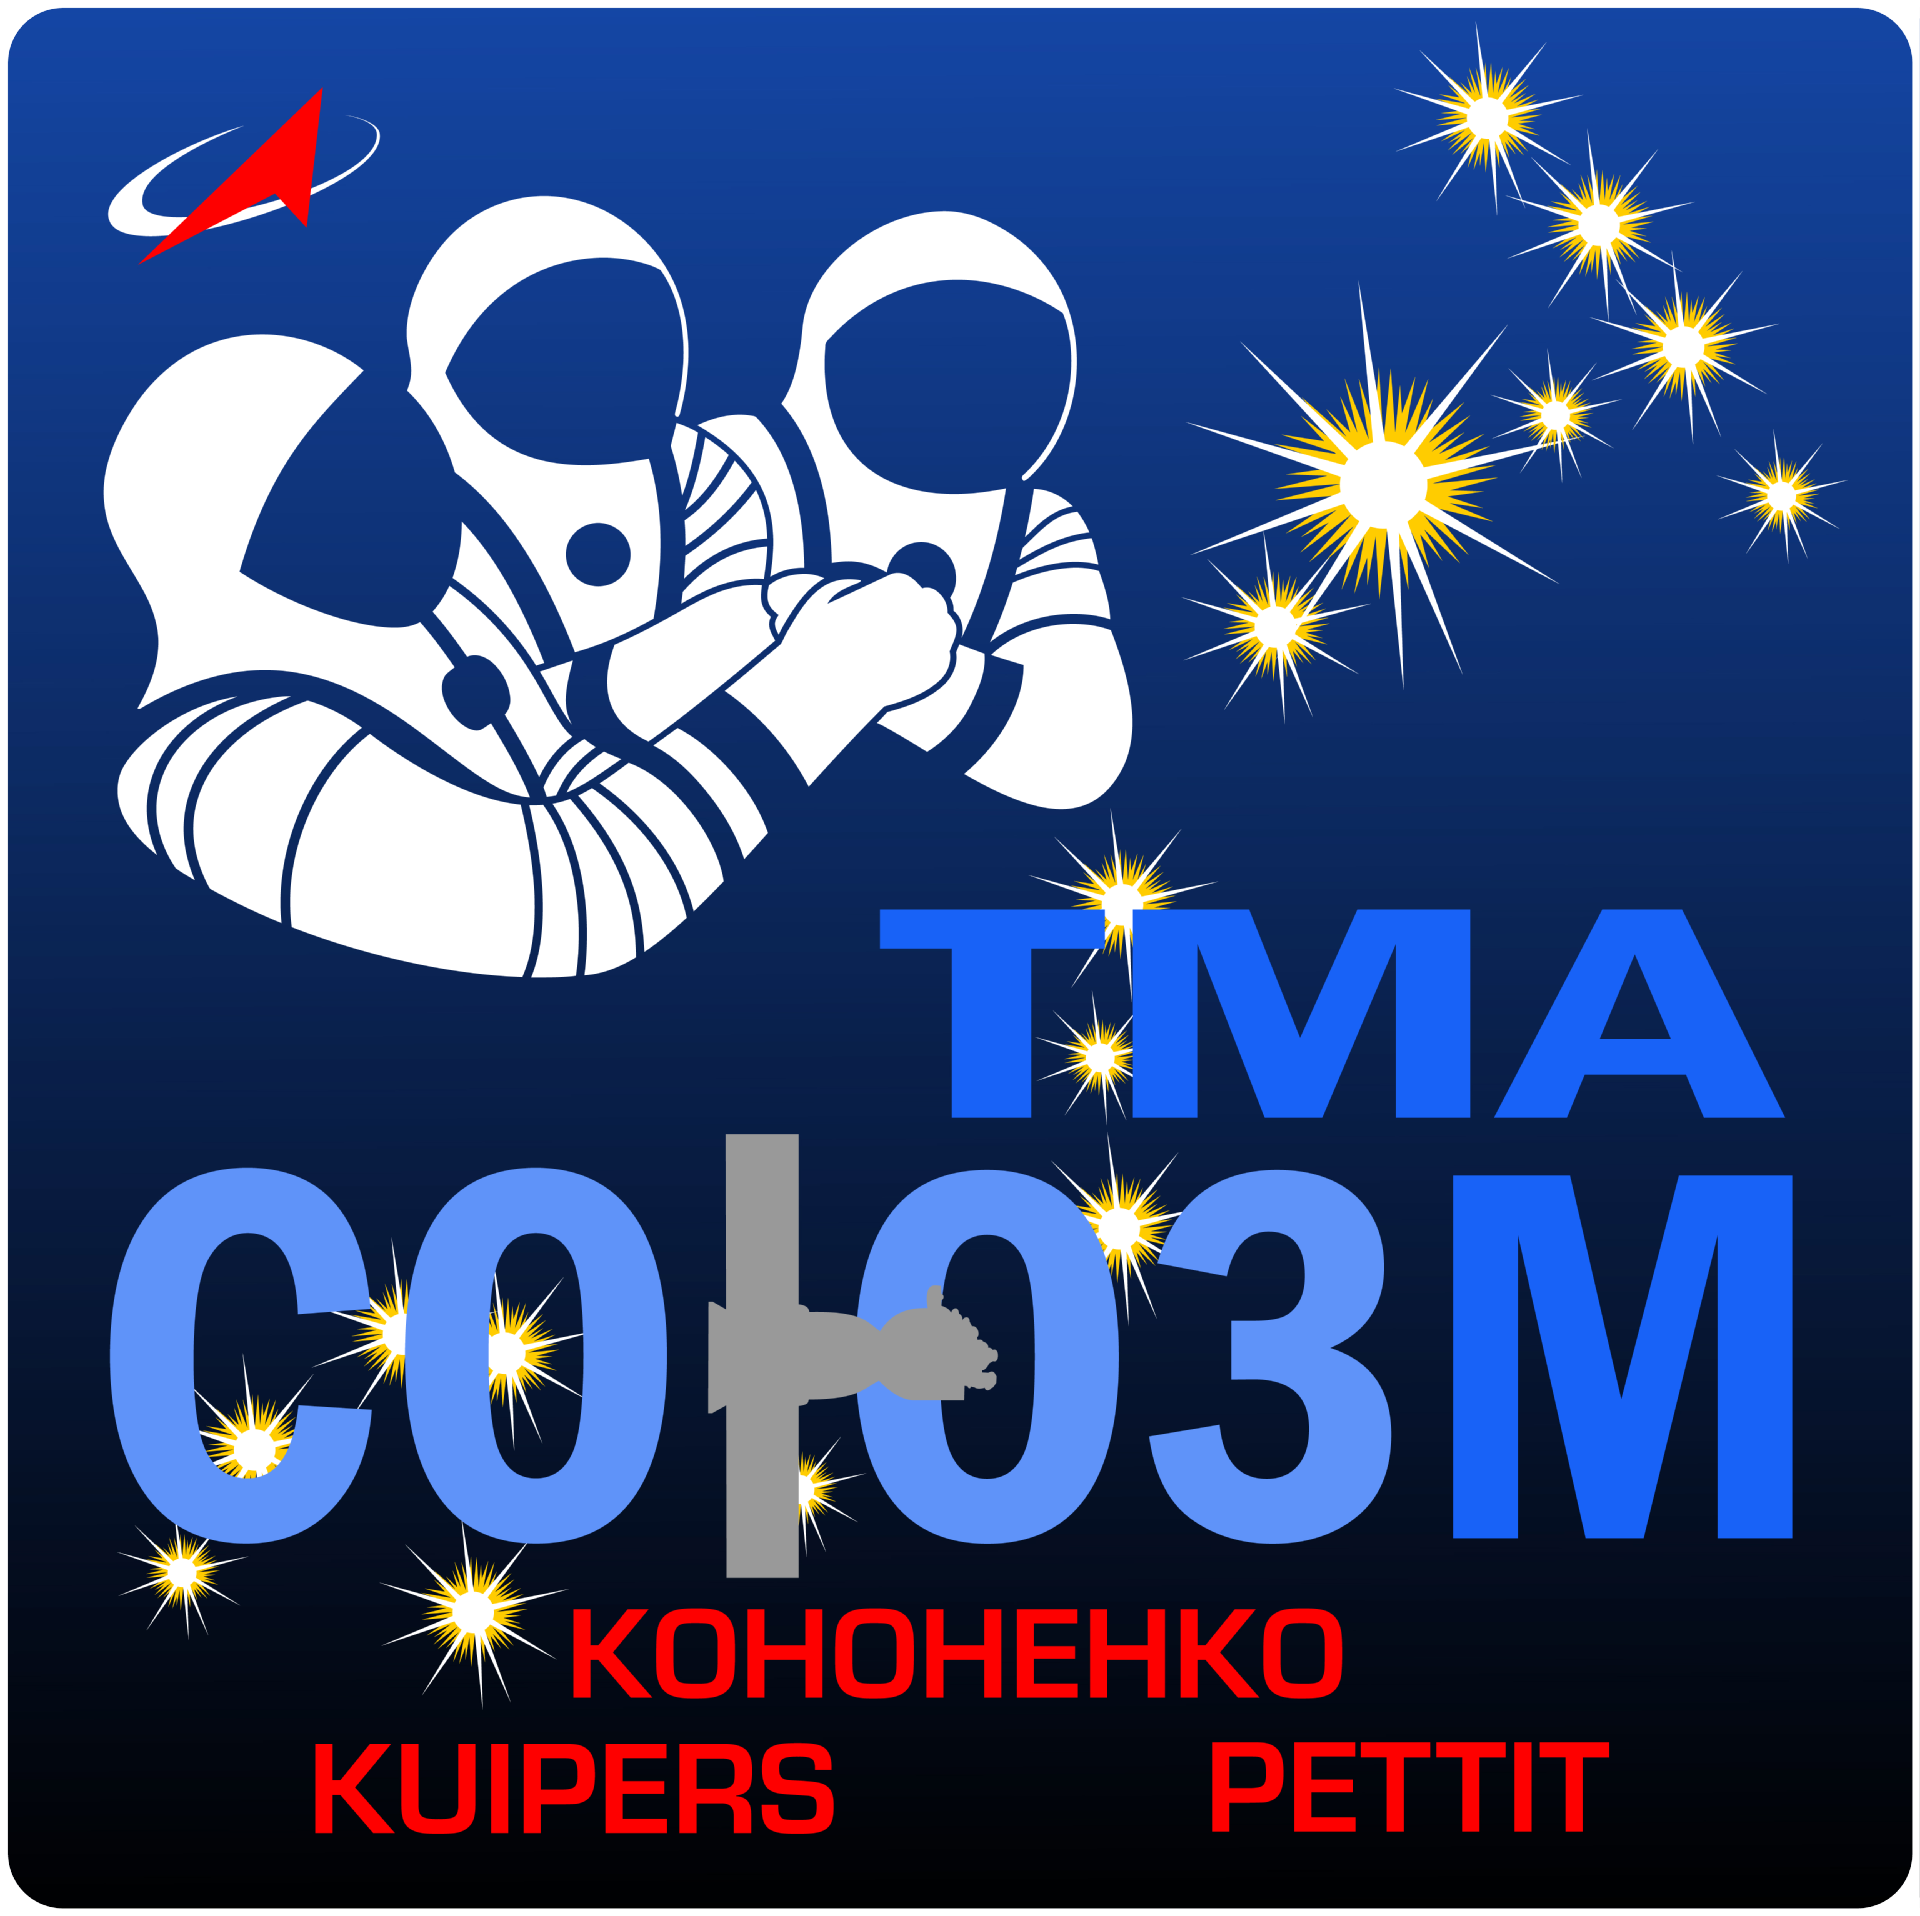 Mission patch for Soyuz TMA-03M